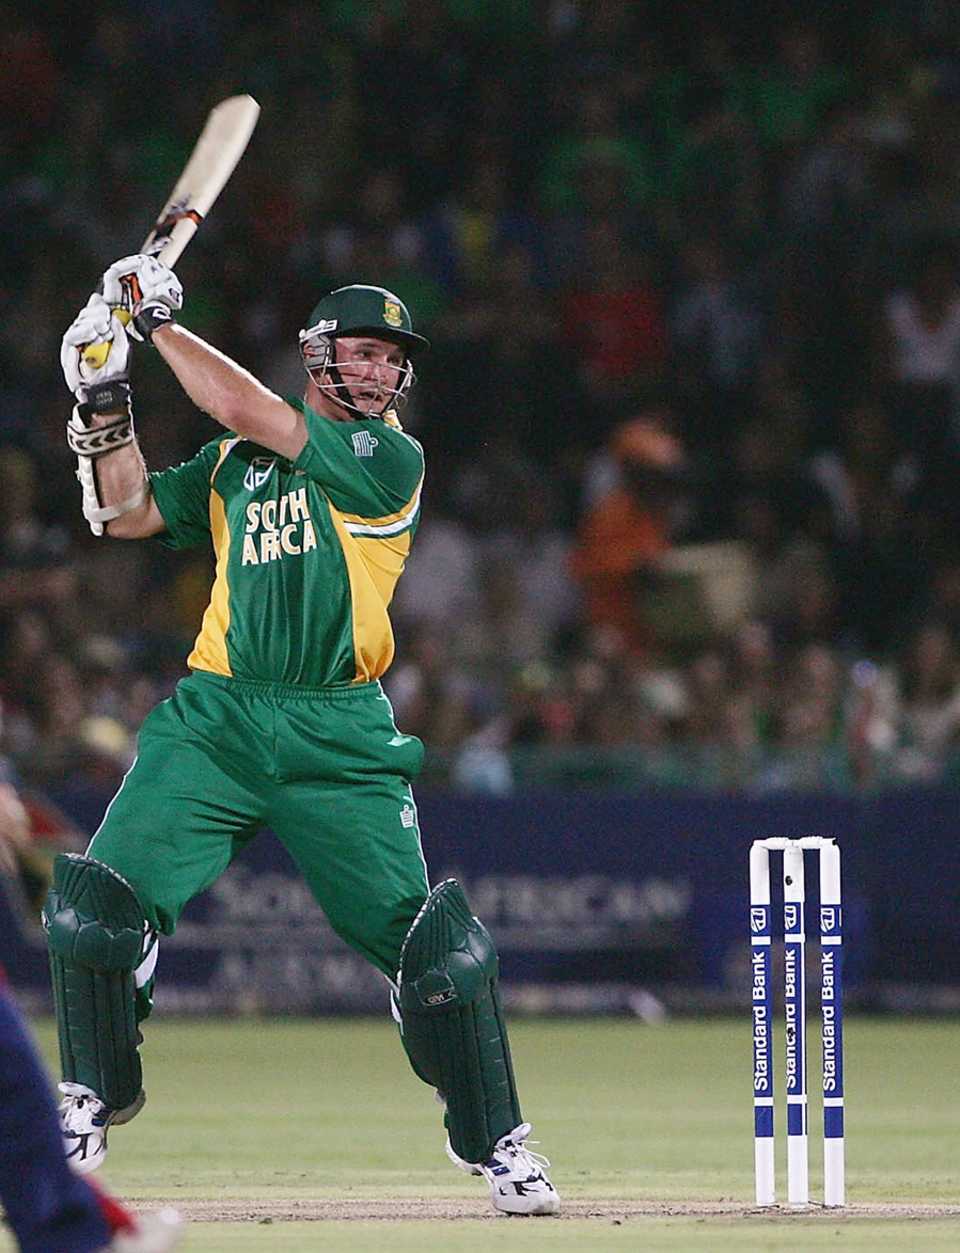 Graeme Smith on his way to a maiden ODI century, South Africa v England, 3rd ODI, Port Elizabeth, 4 February, 2005